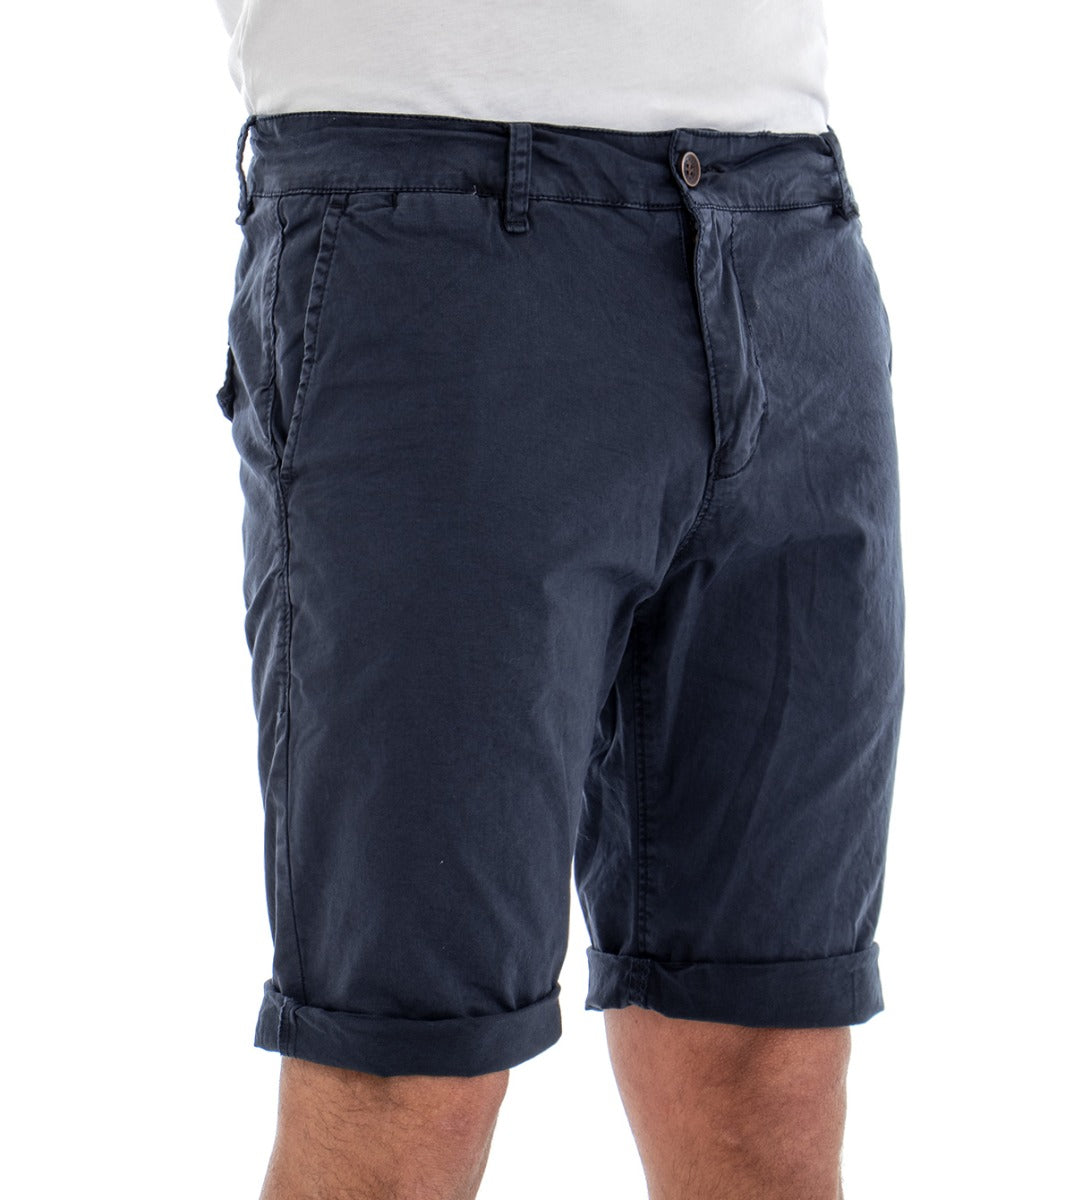 Bermuda Pantaloncino Uomo Corto Tasca America Tinta Unita Blu Slim GIOSAL-PC1300A